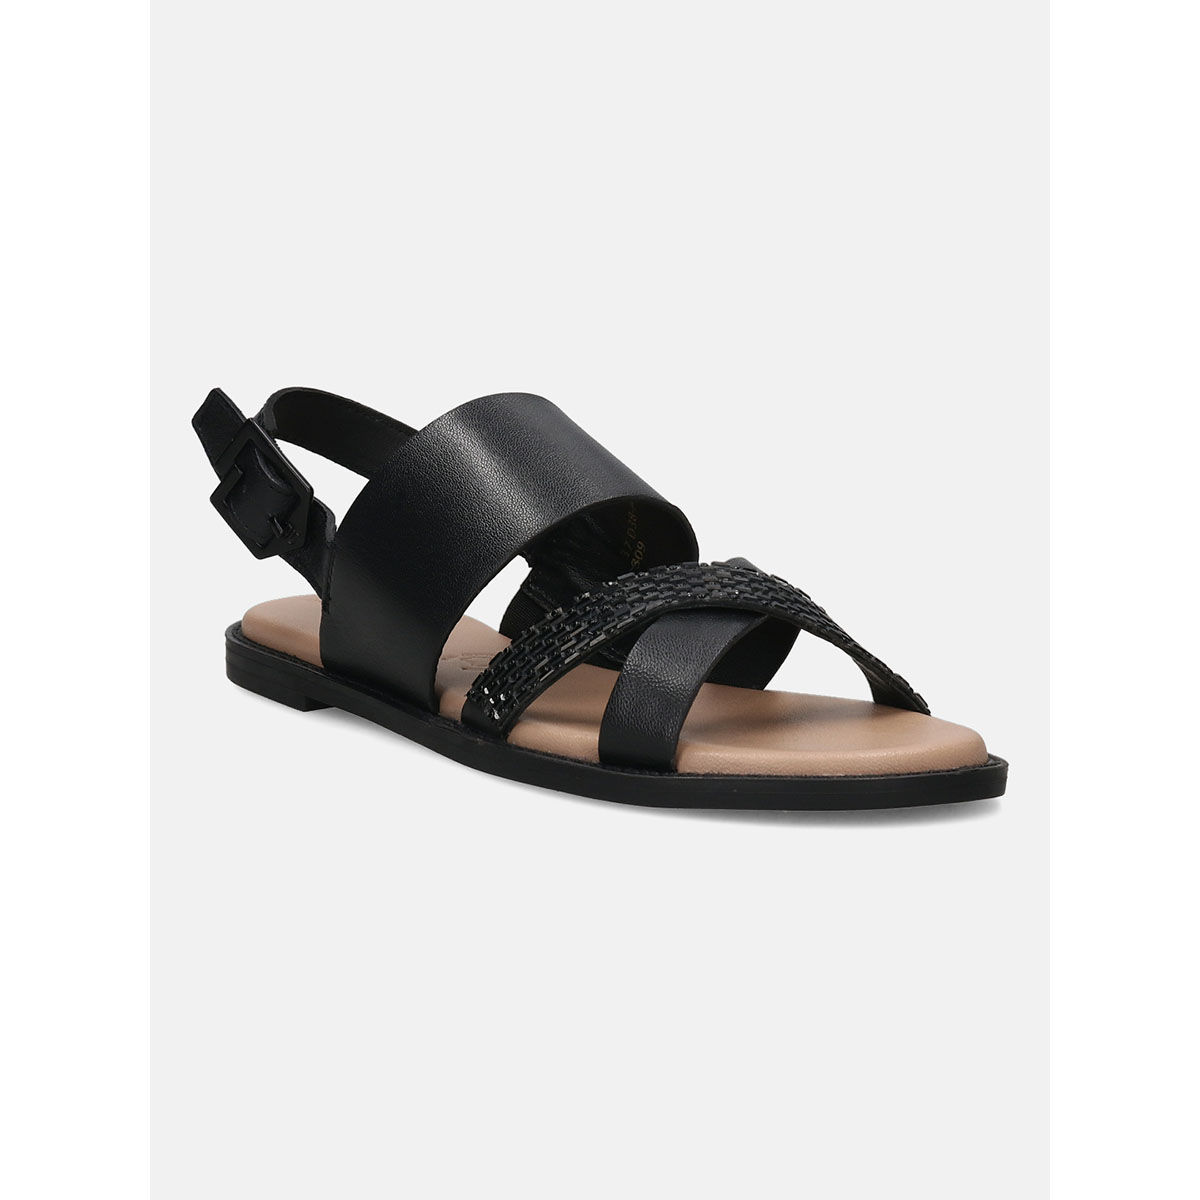 Strappy sandals - Black - Ladies | H&M